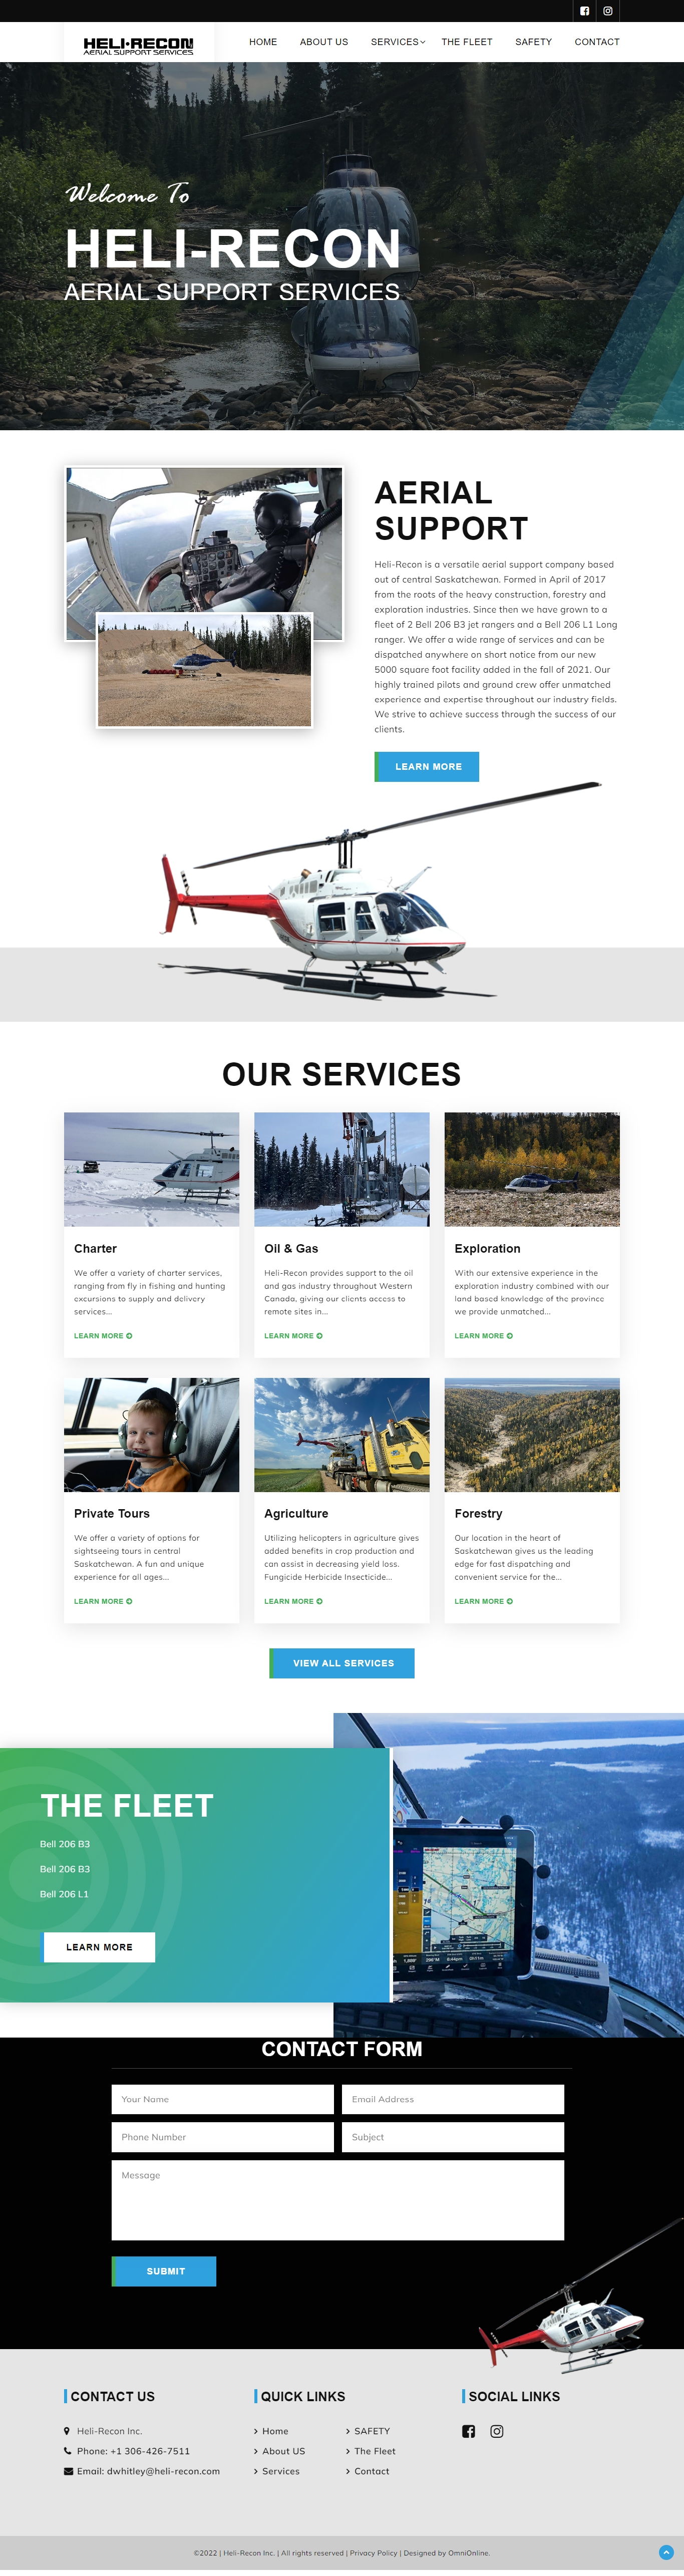 Heli-Recon Business web design by OmniOnline